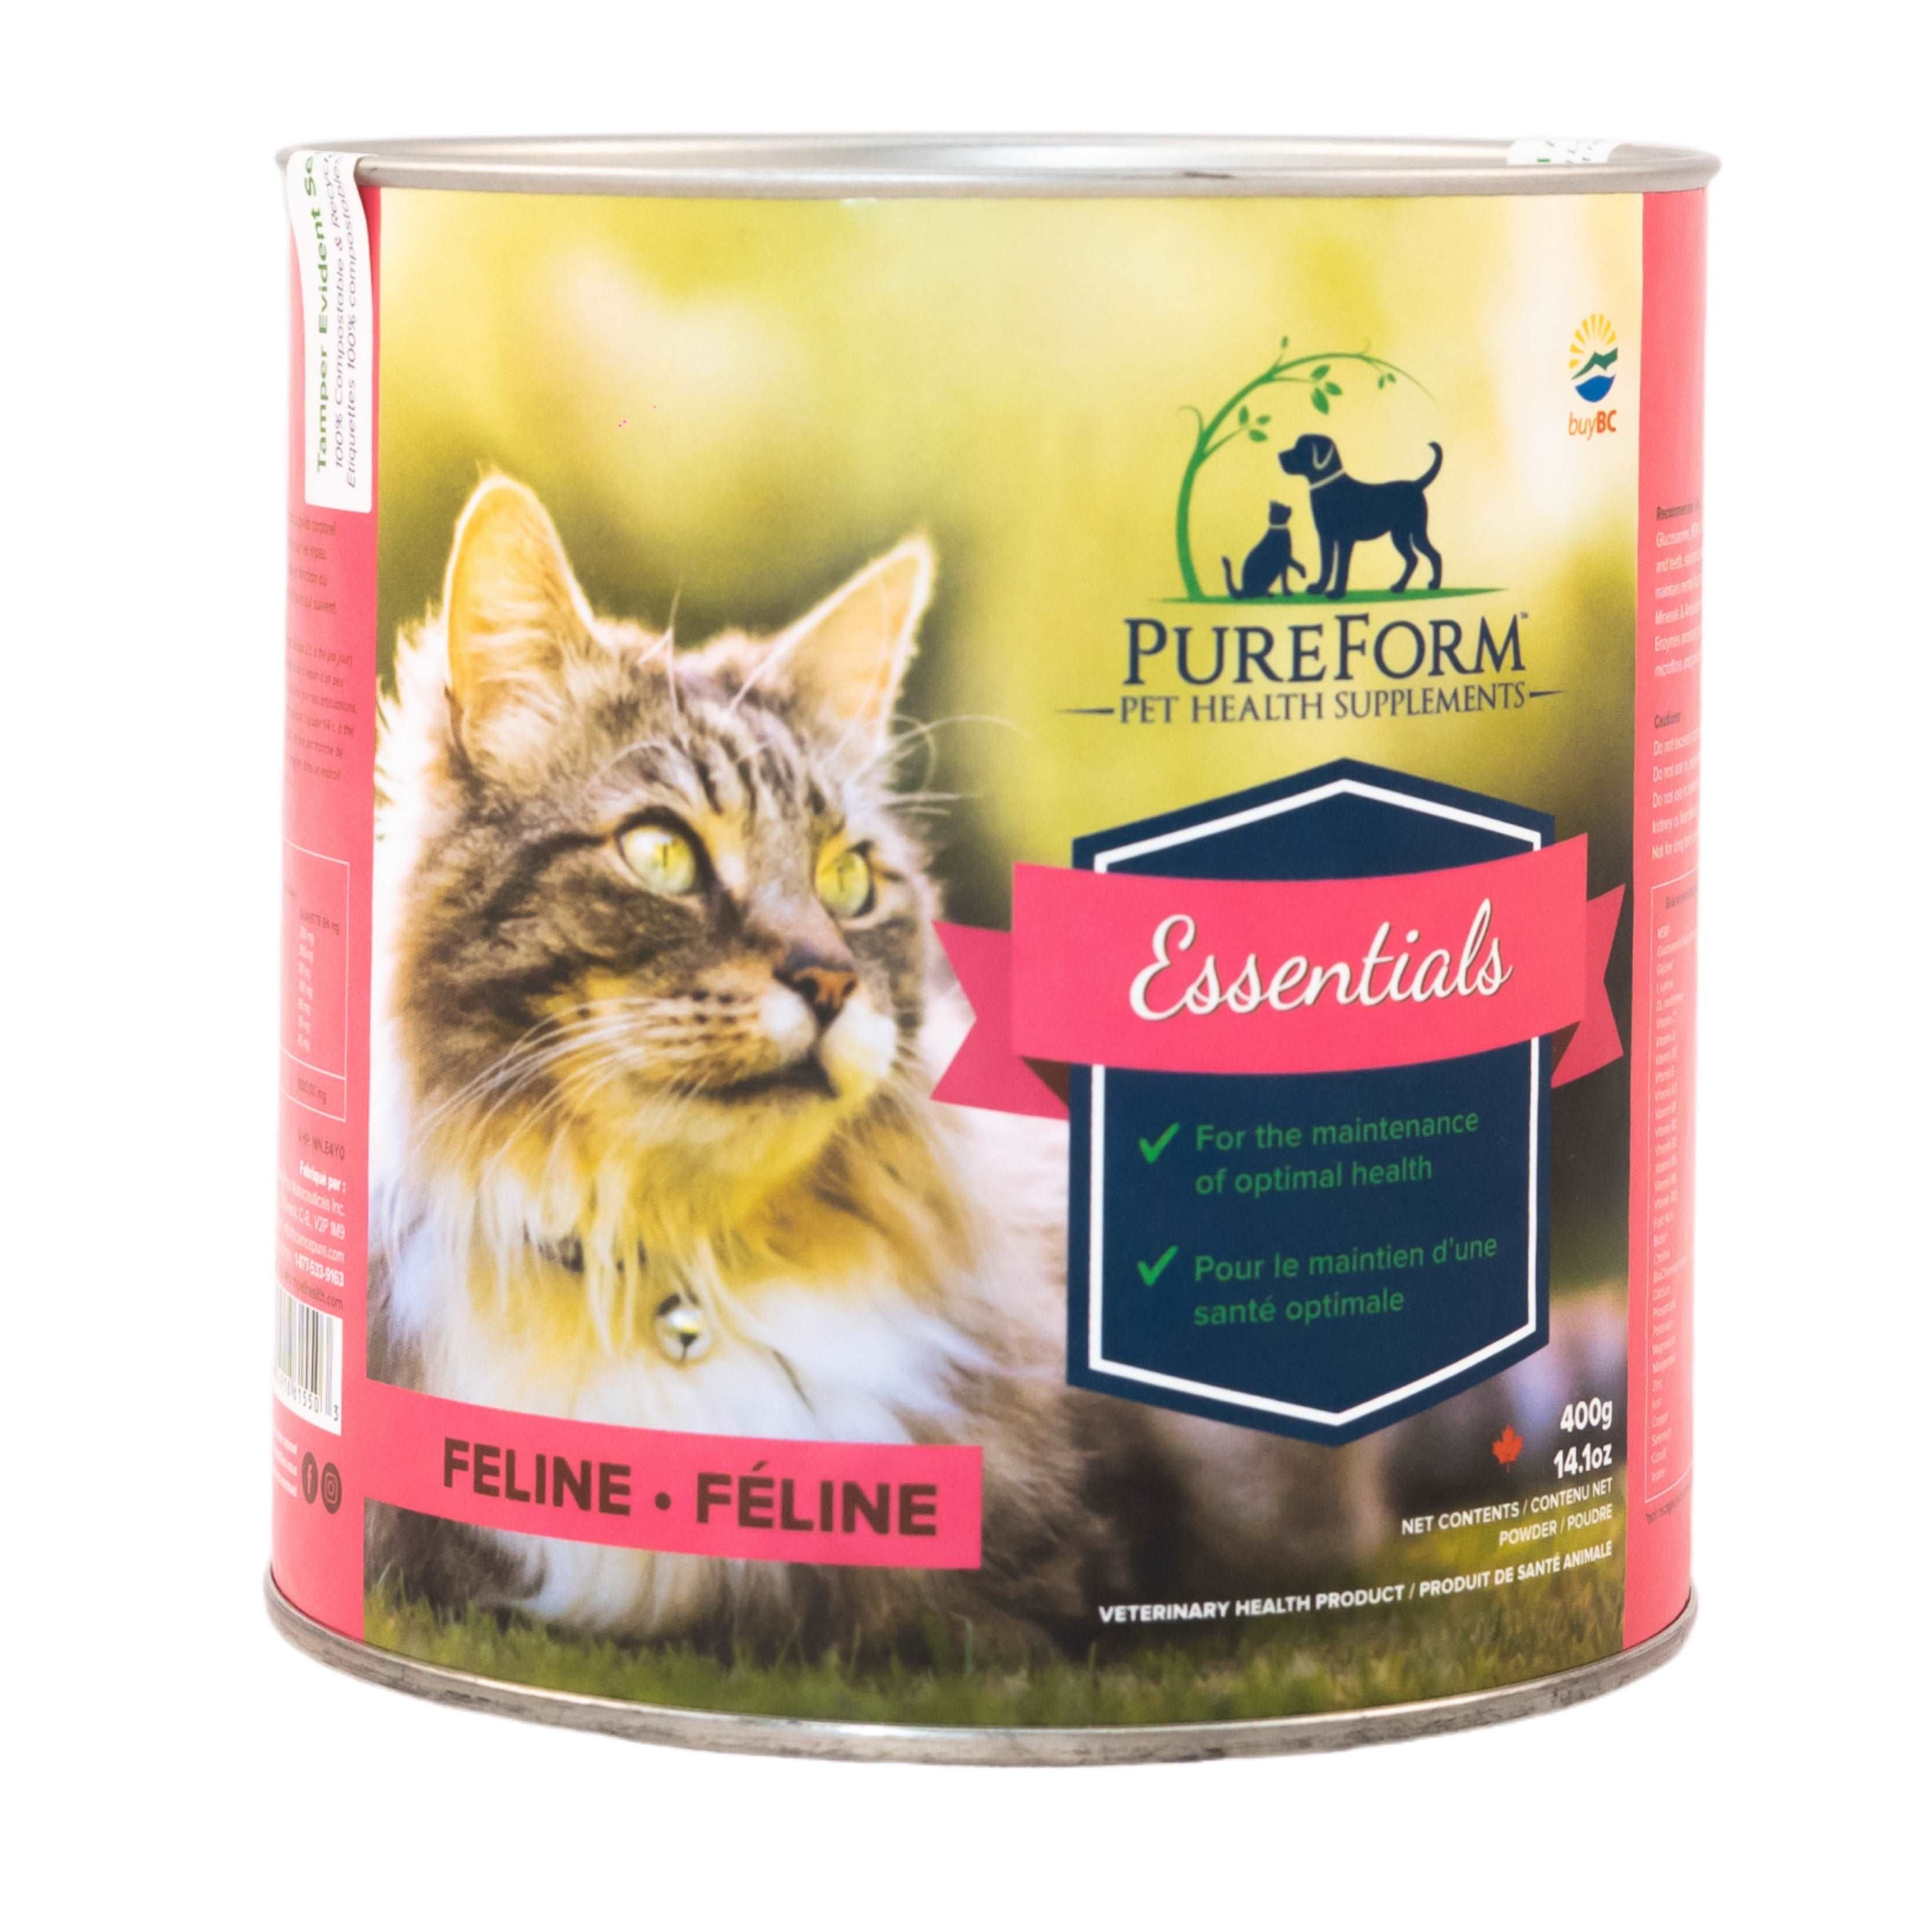 FELINE ESSENTIALS - PureForm Pet Health Supplements